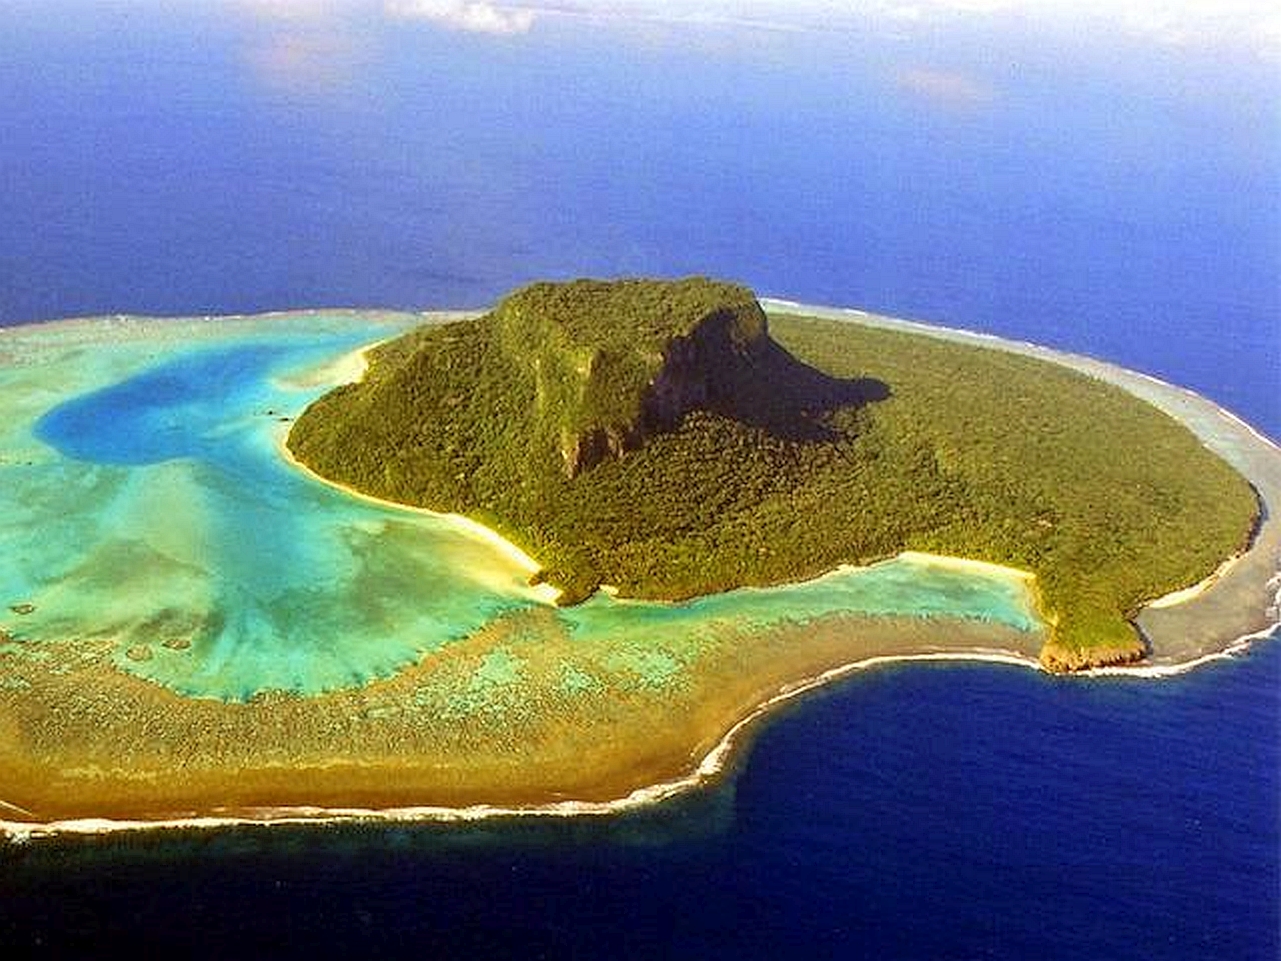 Island galleries. Остров Монурики Фиджи. Остров вату вара. Острова Лау, Фиджи. Фиджи архипелаг или остров.